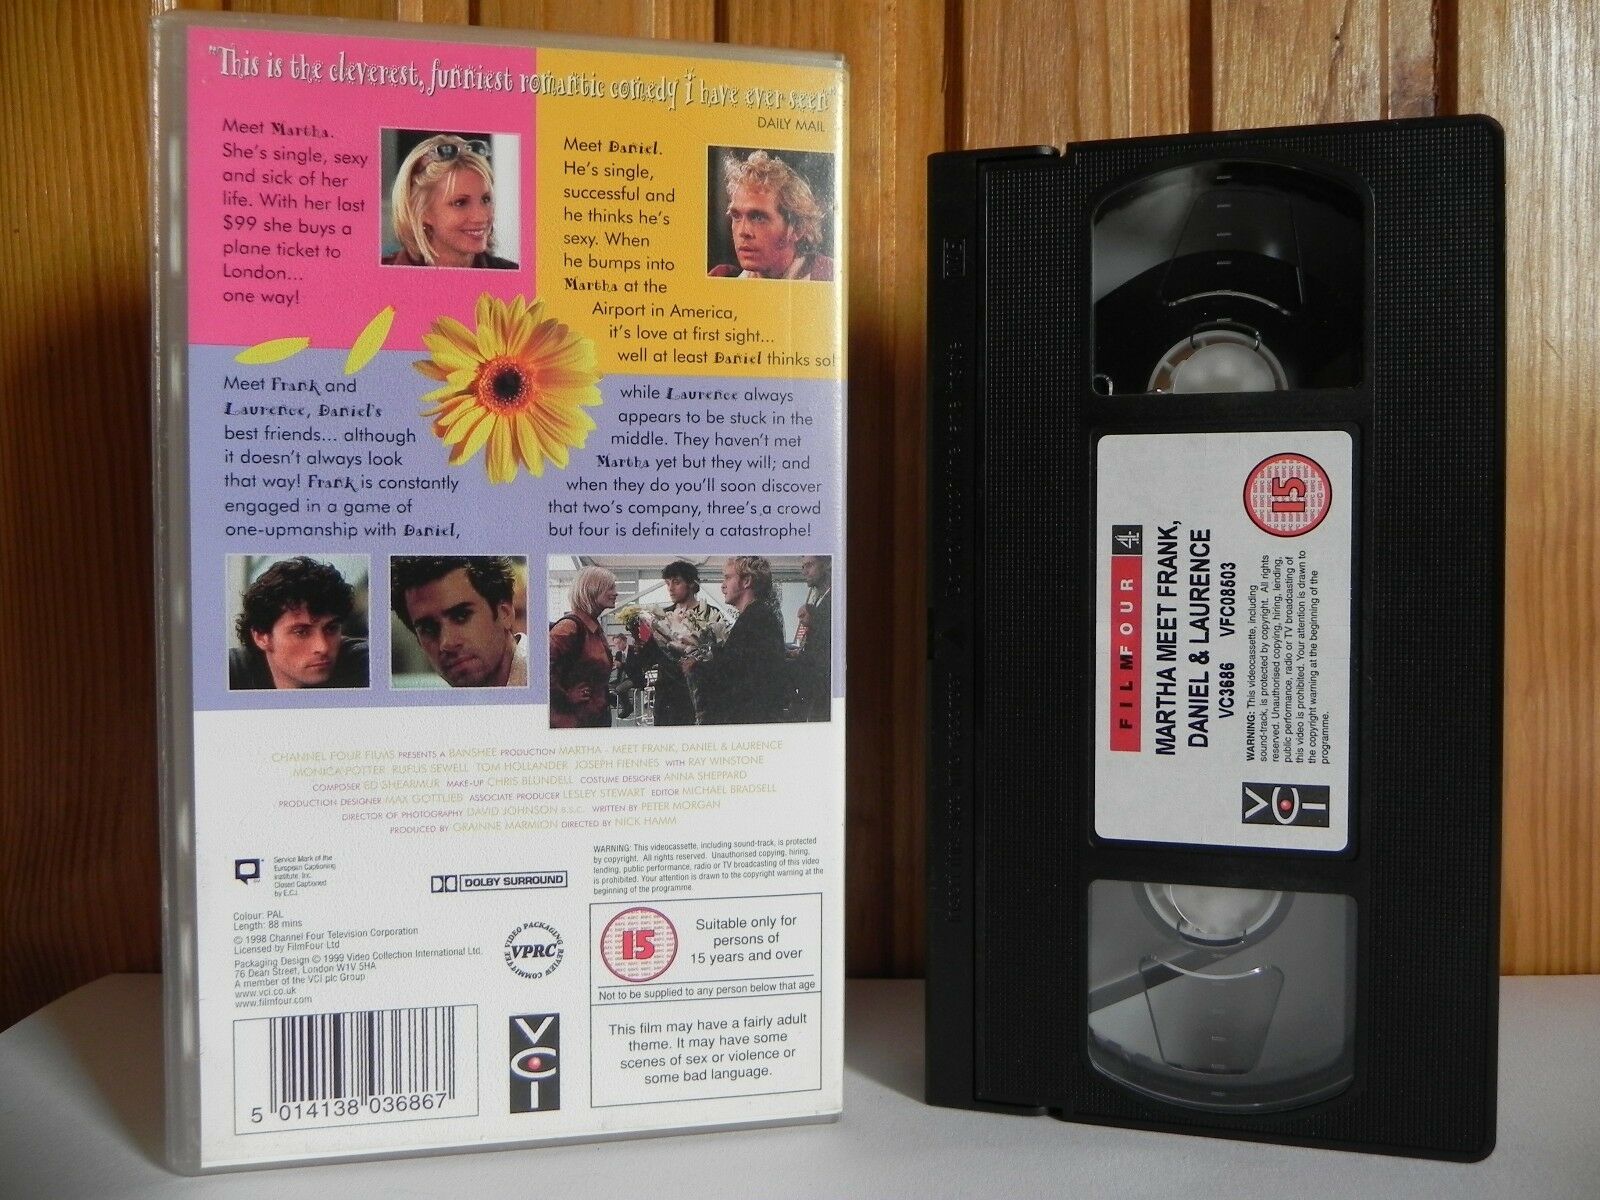 Martha Meet Frank, Daniel & Laurence - Film Four - Romantic Comedy - Pal VHS-